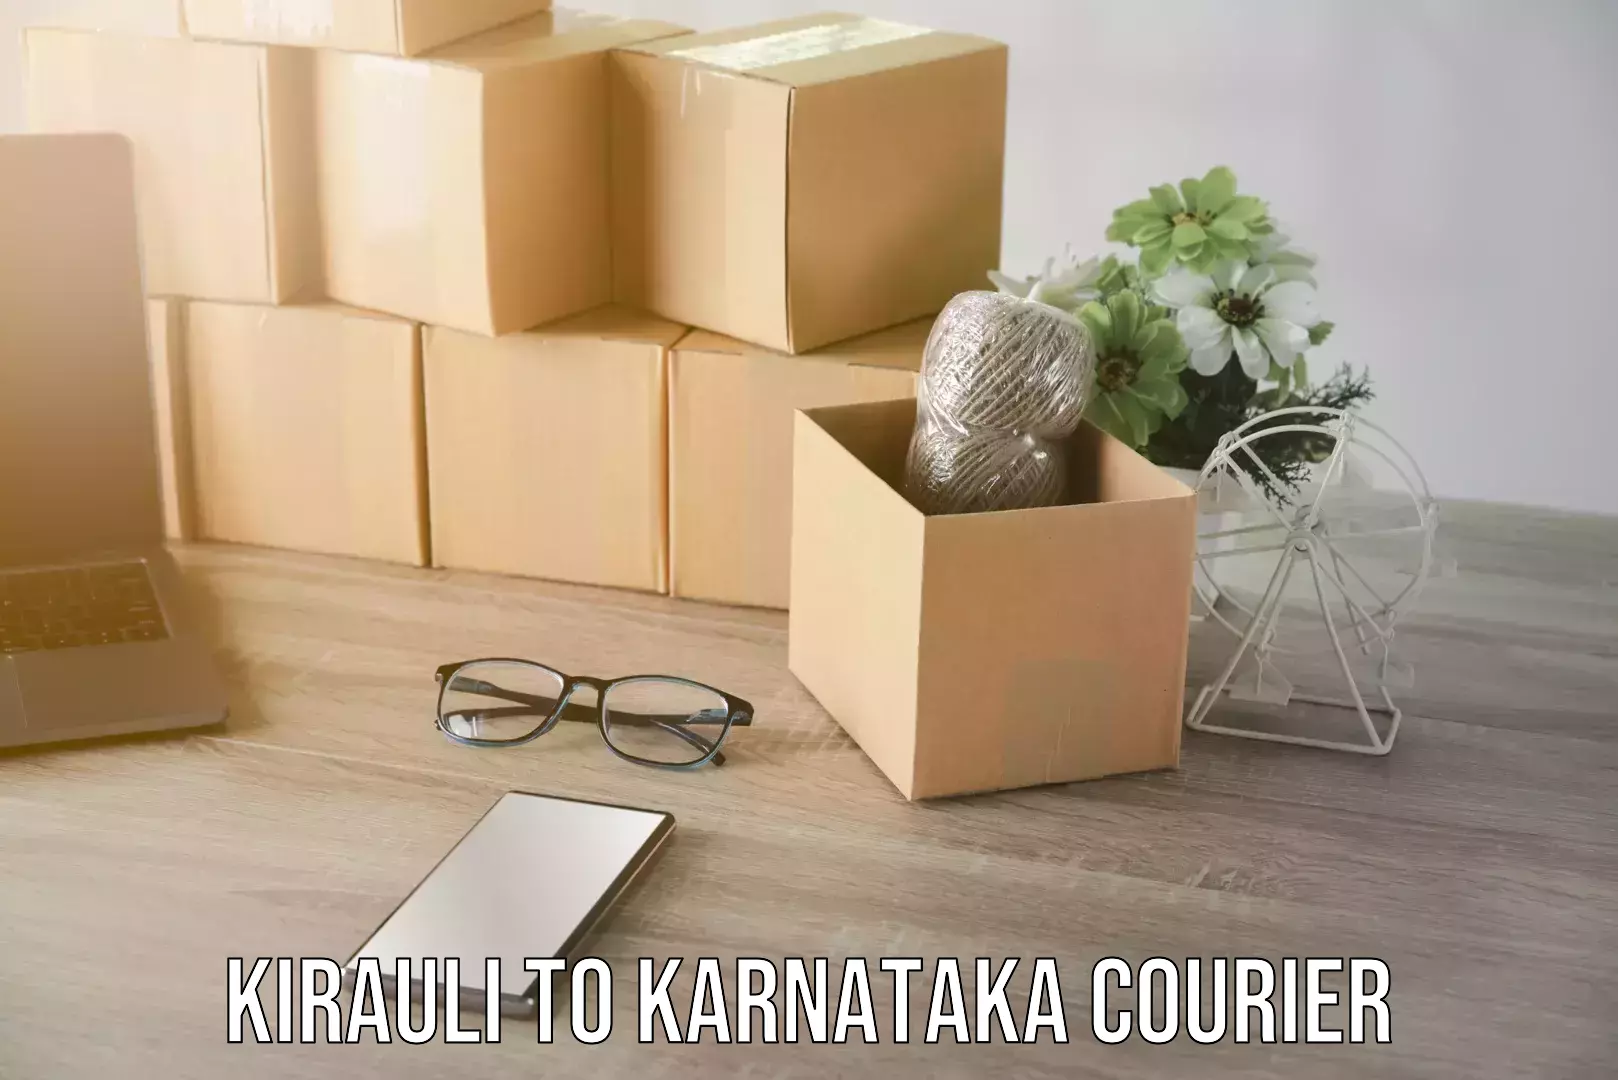 Furniture moving service Kirauli to Karnataka